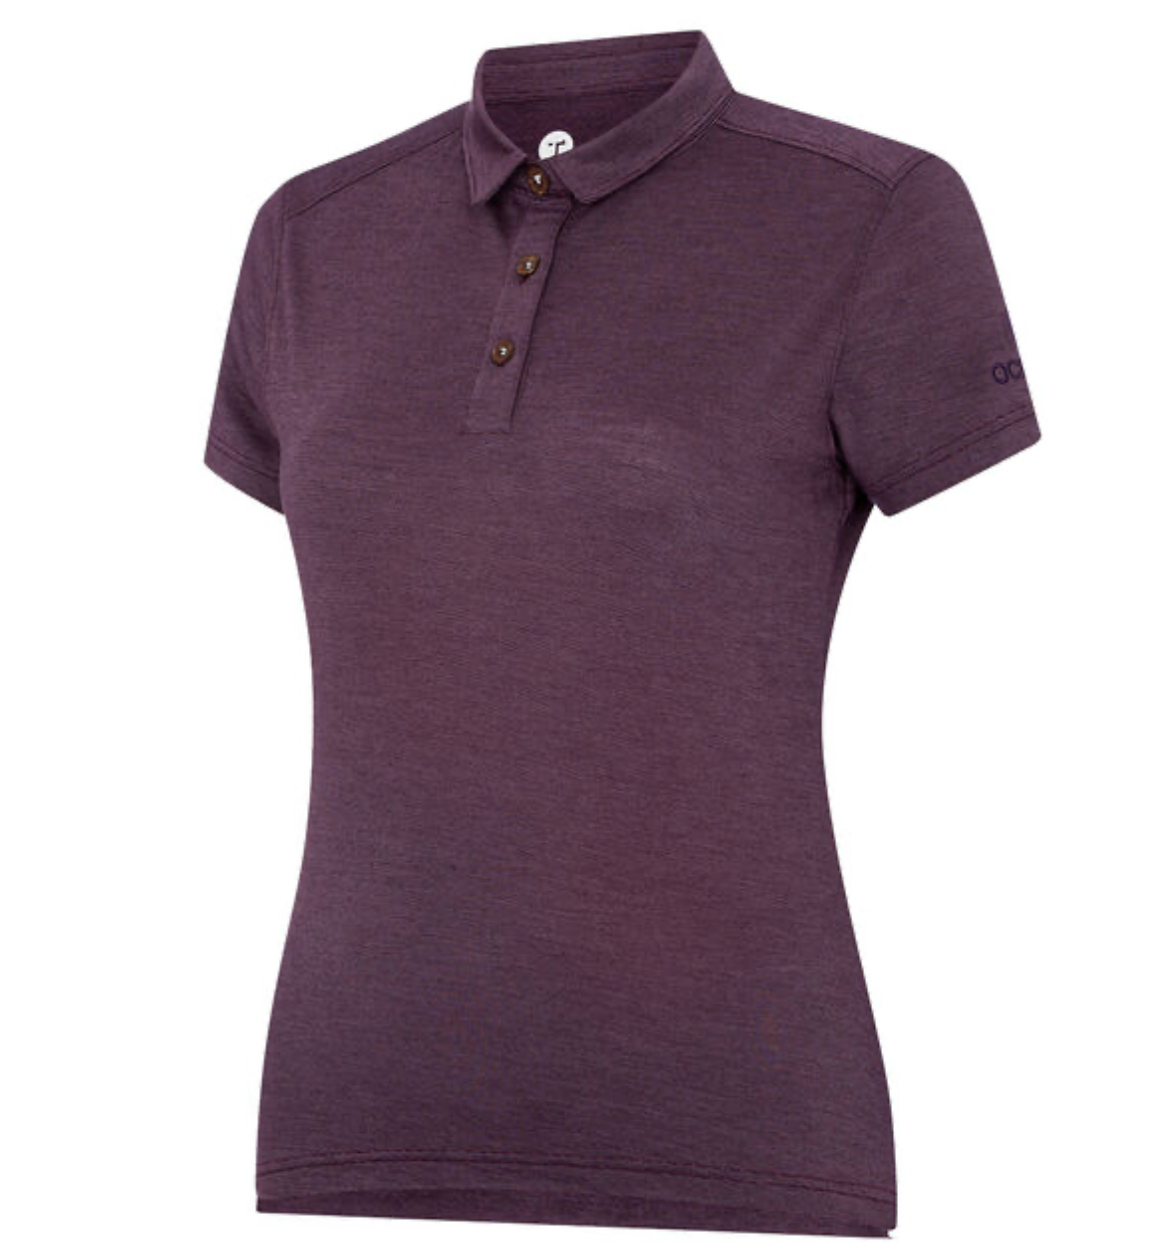 Oceantee Women's Polo Shirt - 5 Sizes Available